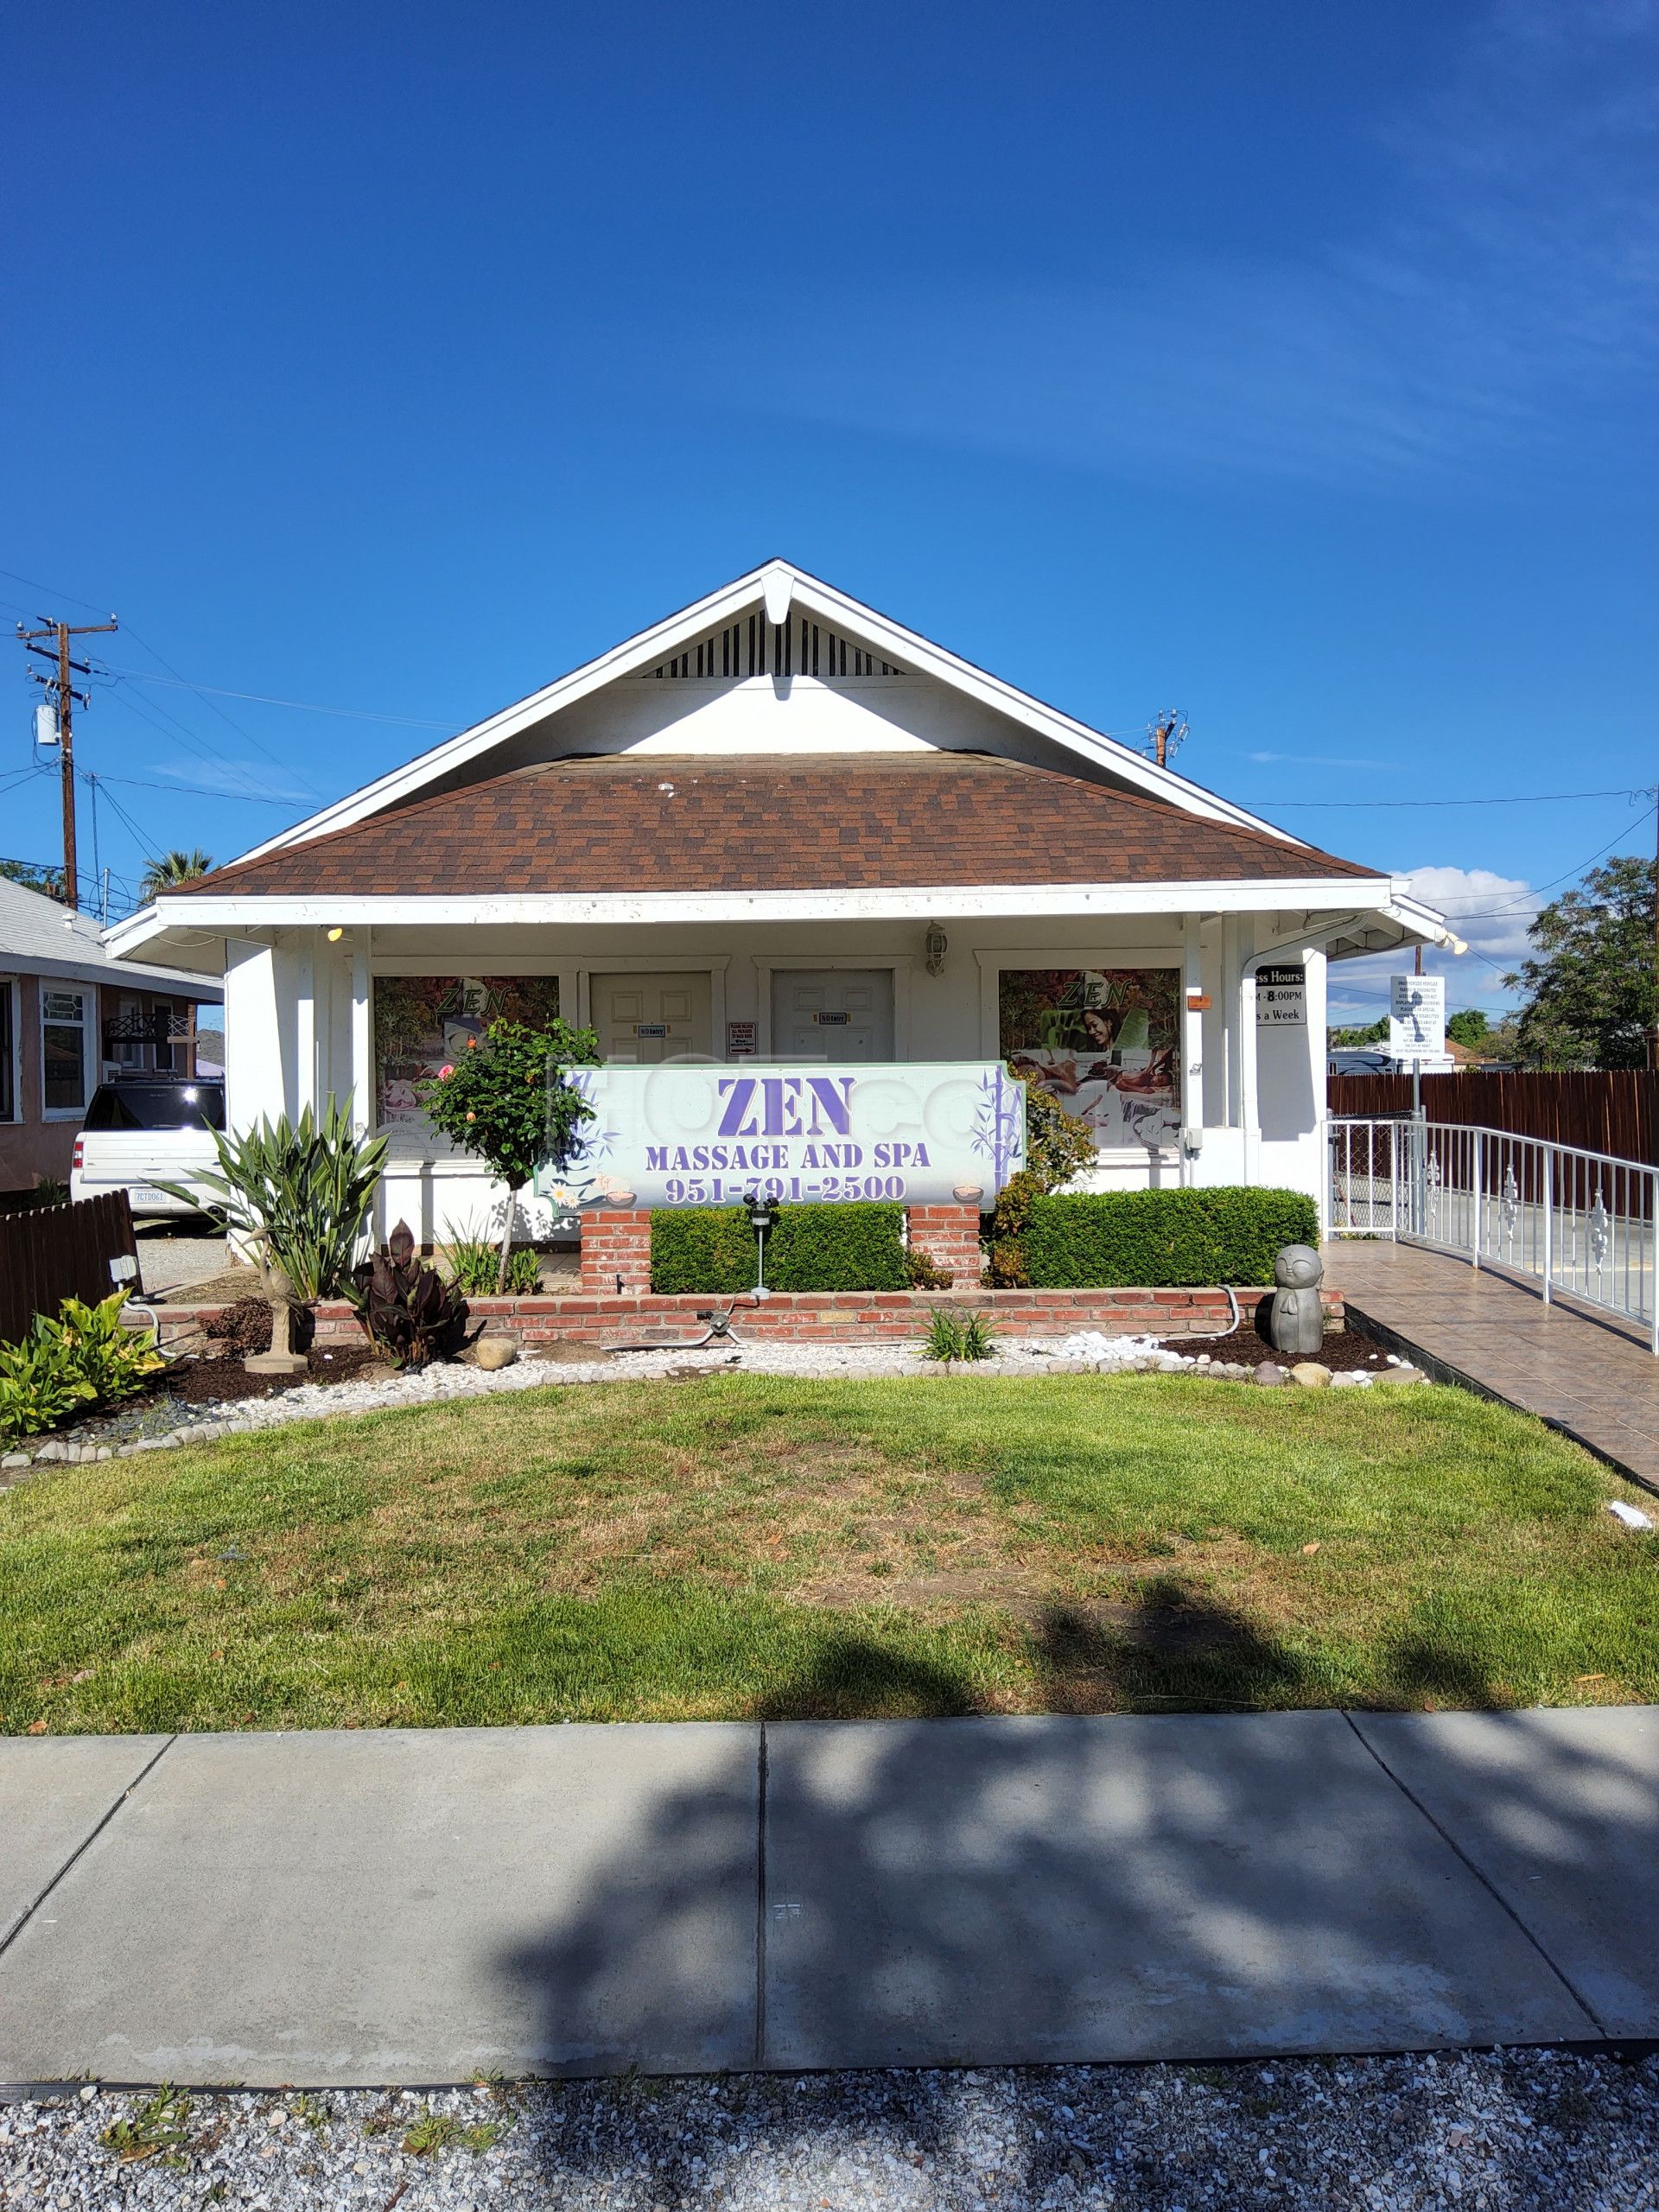 Hemet, California Zen Garden Massage & Spa